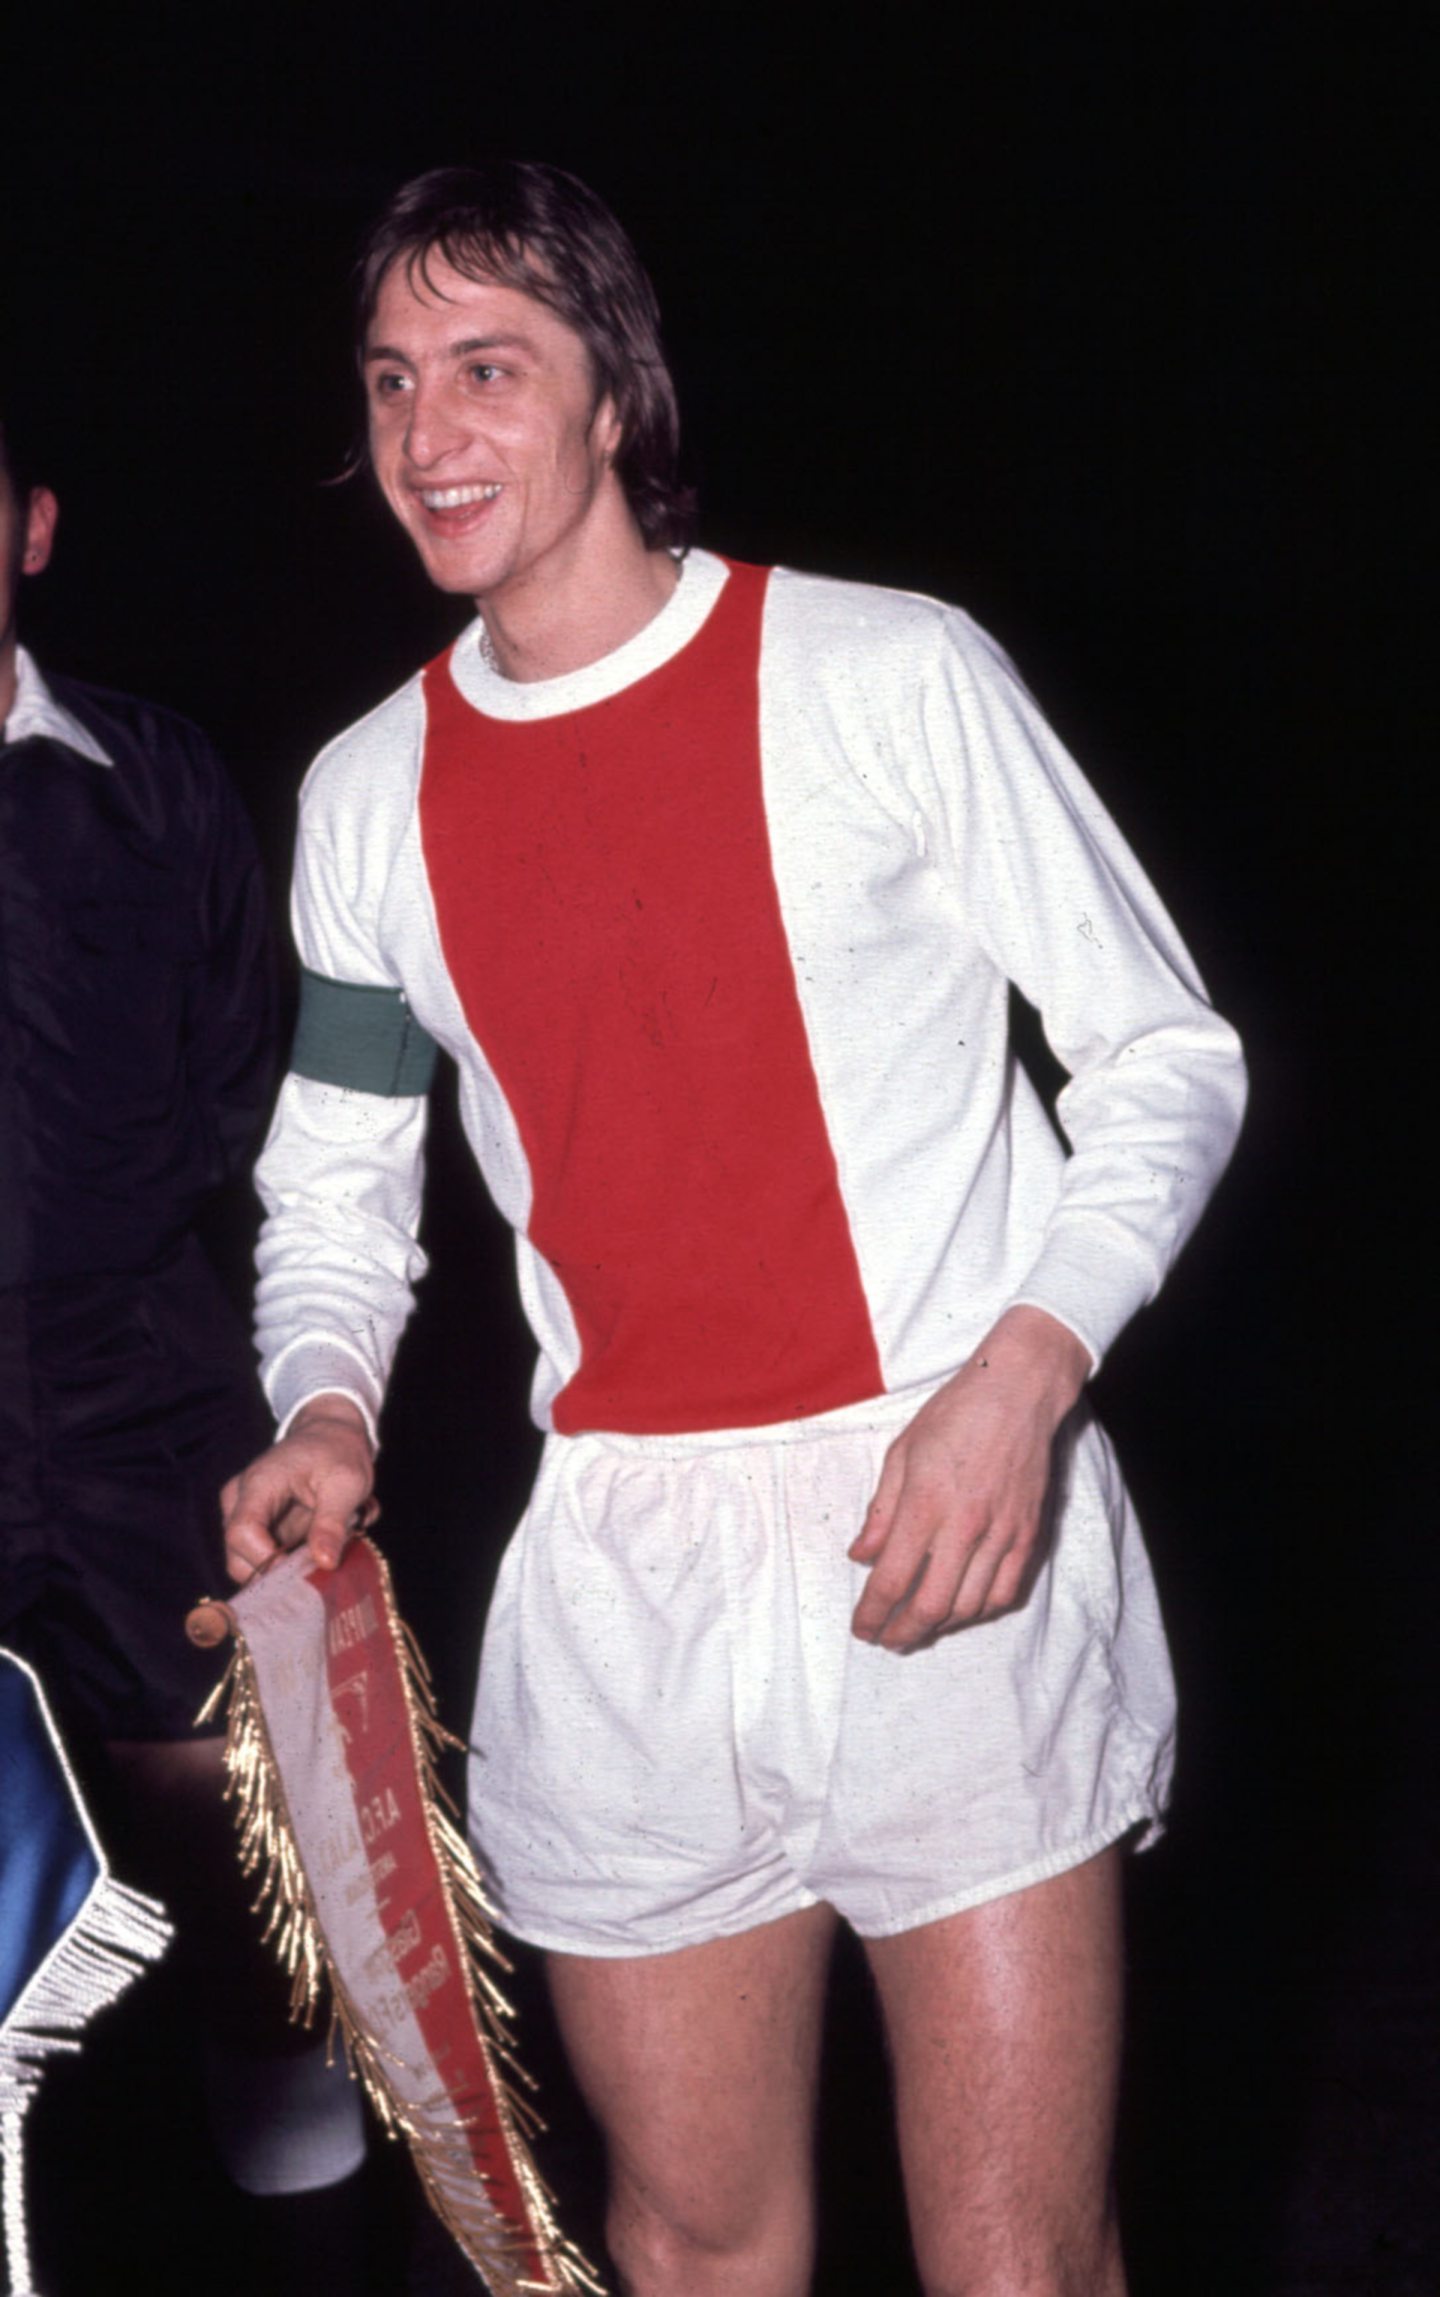 Ajax legend Johan Cruyff during 1973/74 season.